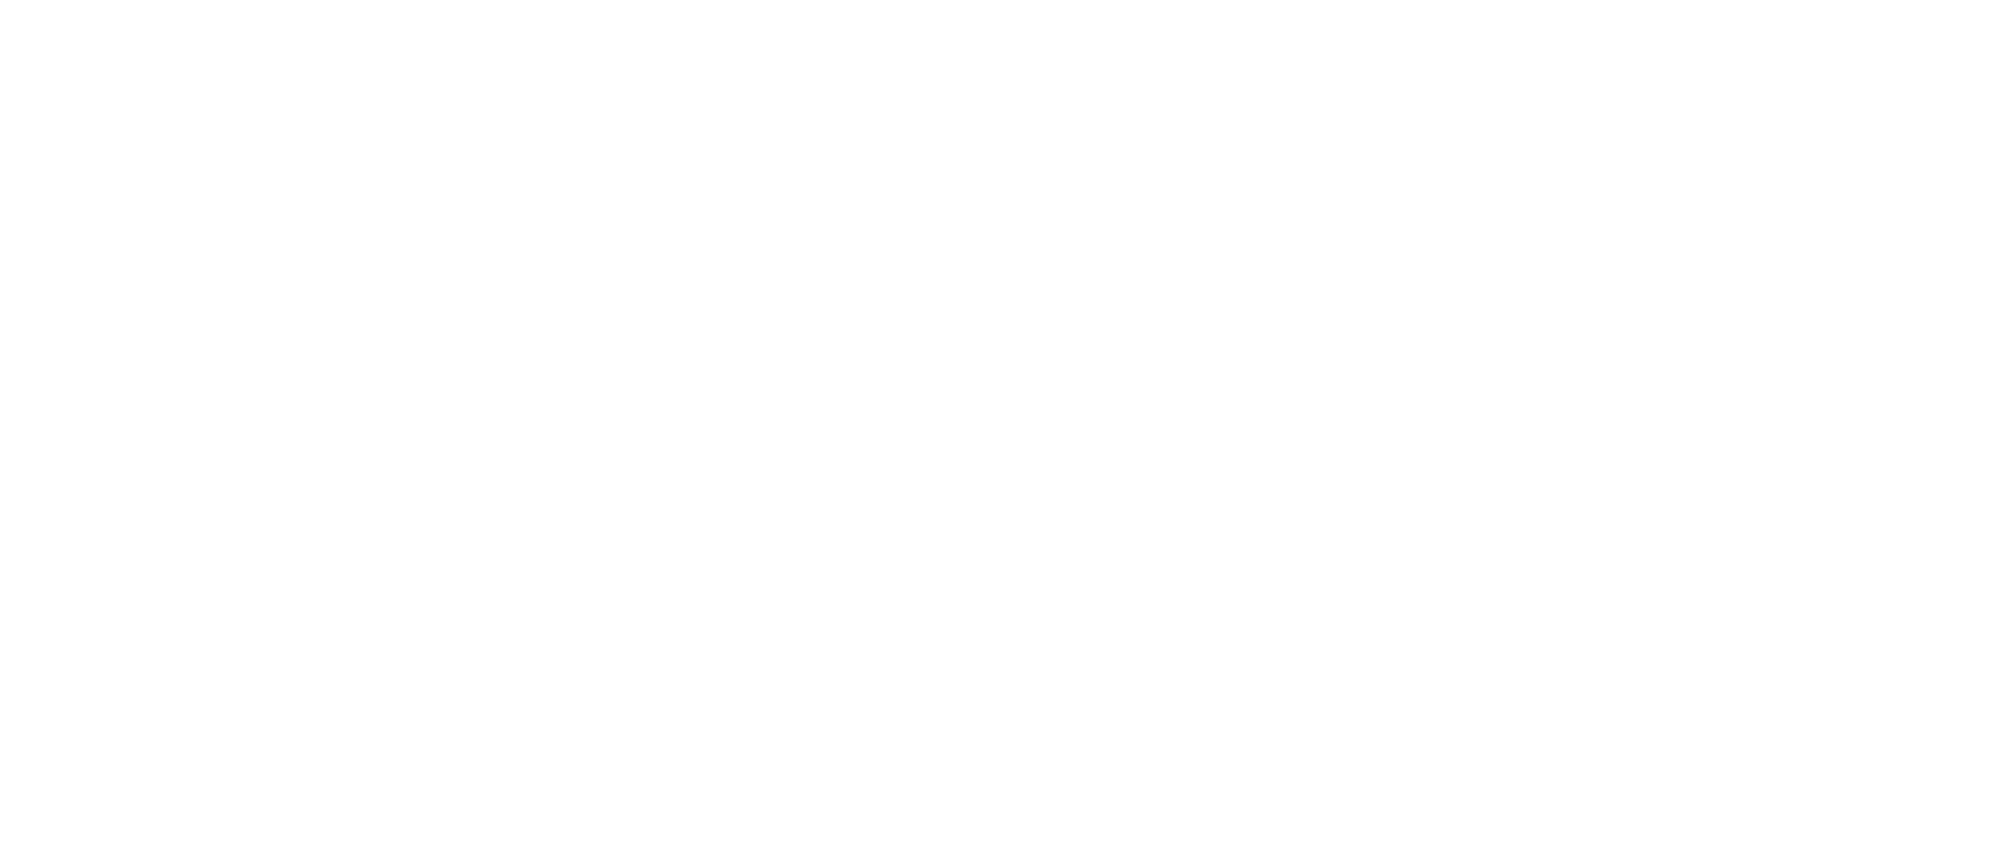 DMC Partners